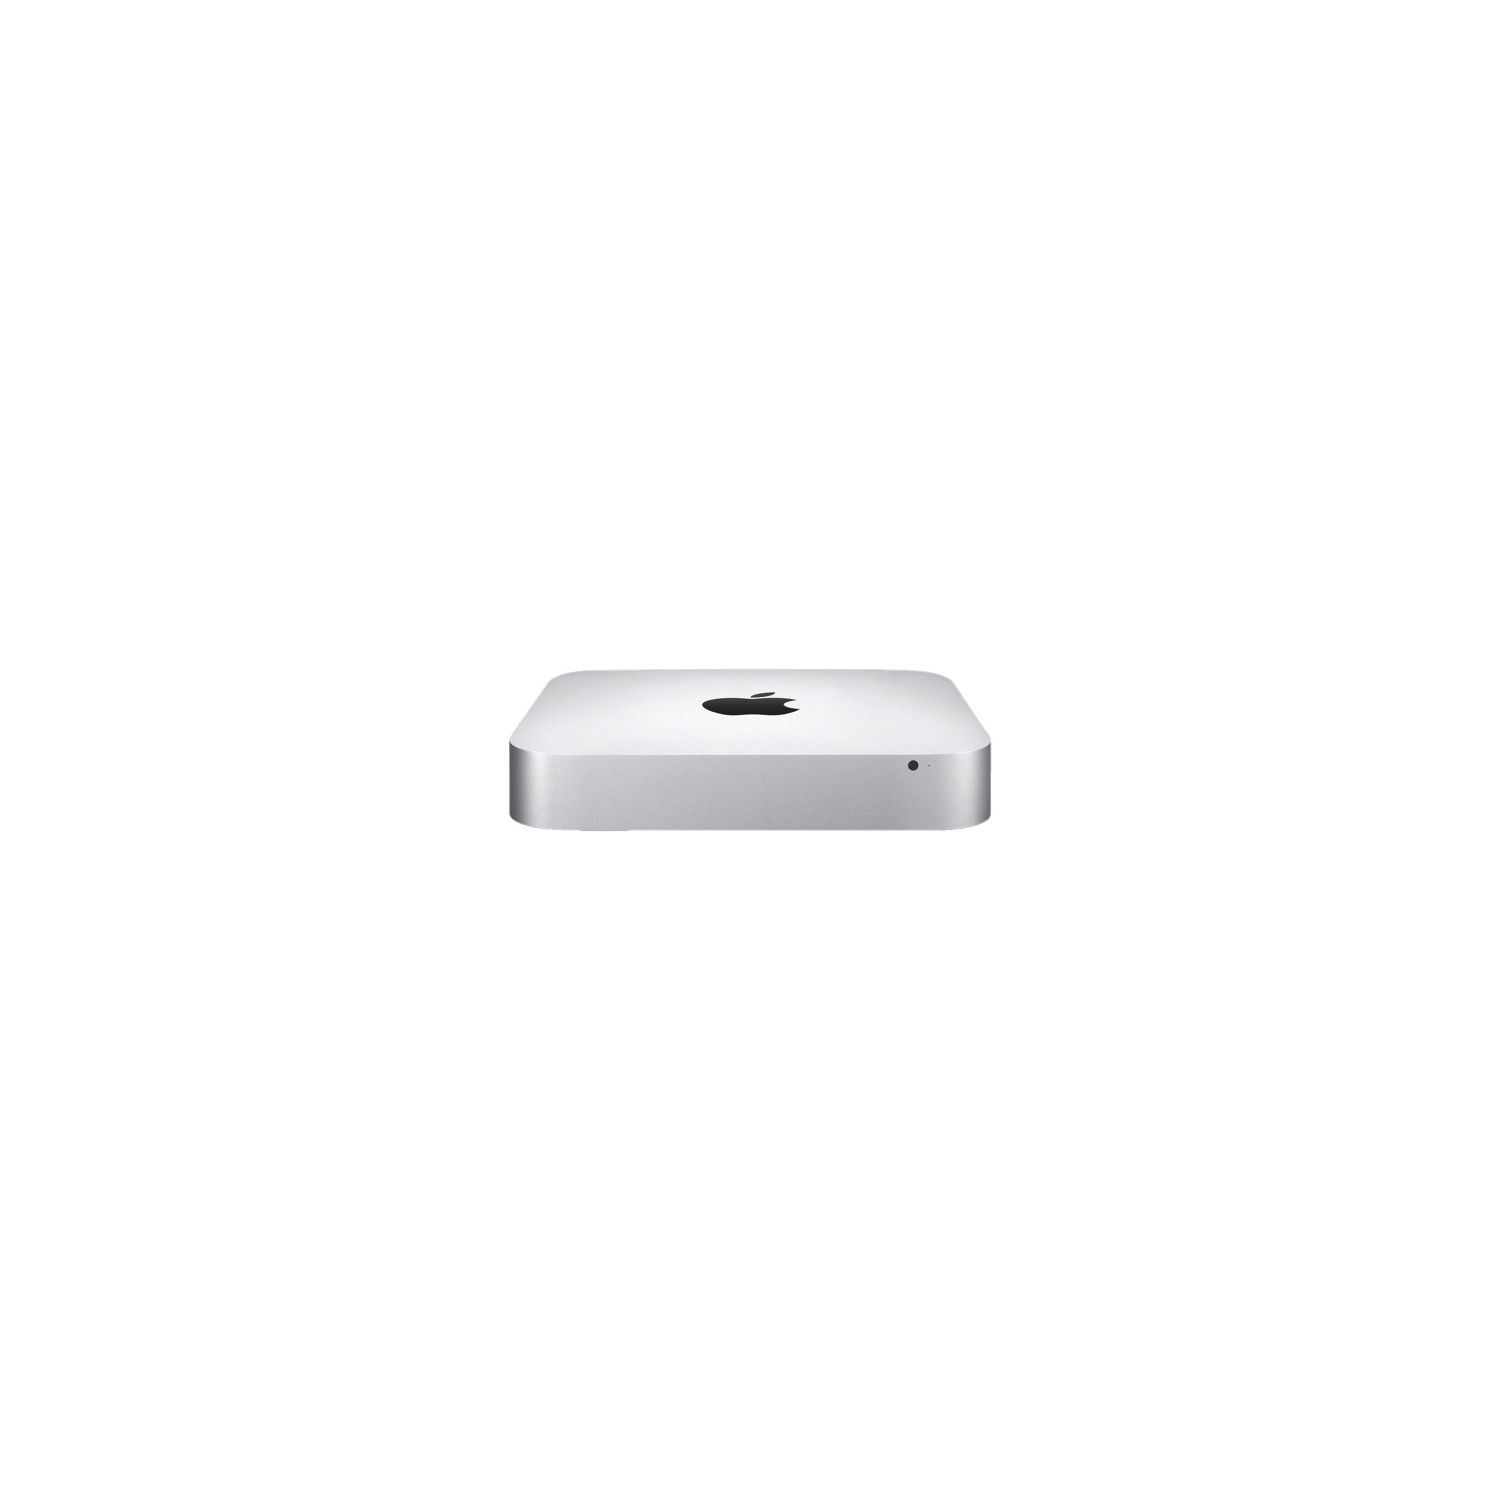 Refurbished (Excellent) - Apple Mac mini Intel Core i5 Dual Core 1.4GHz Computer -Eng